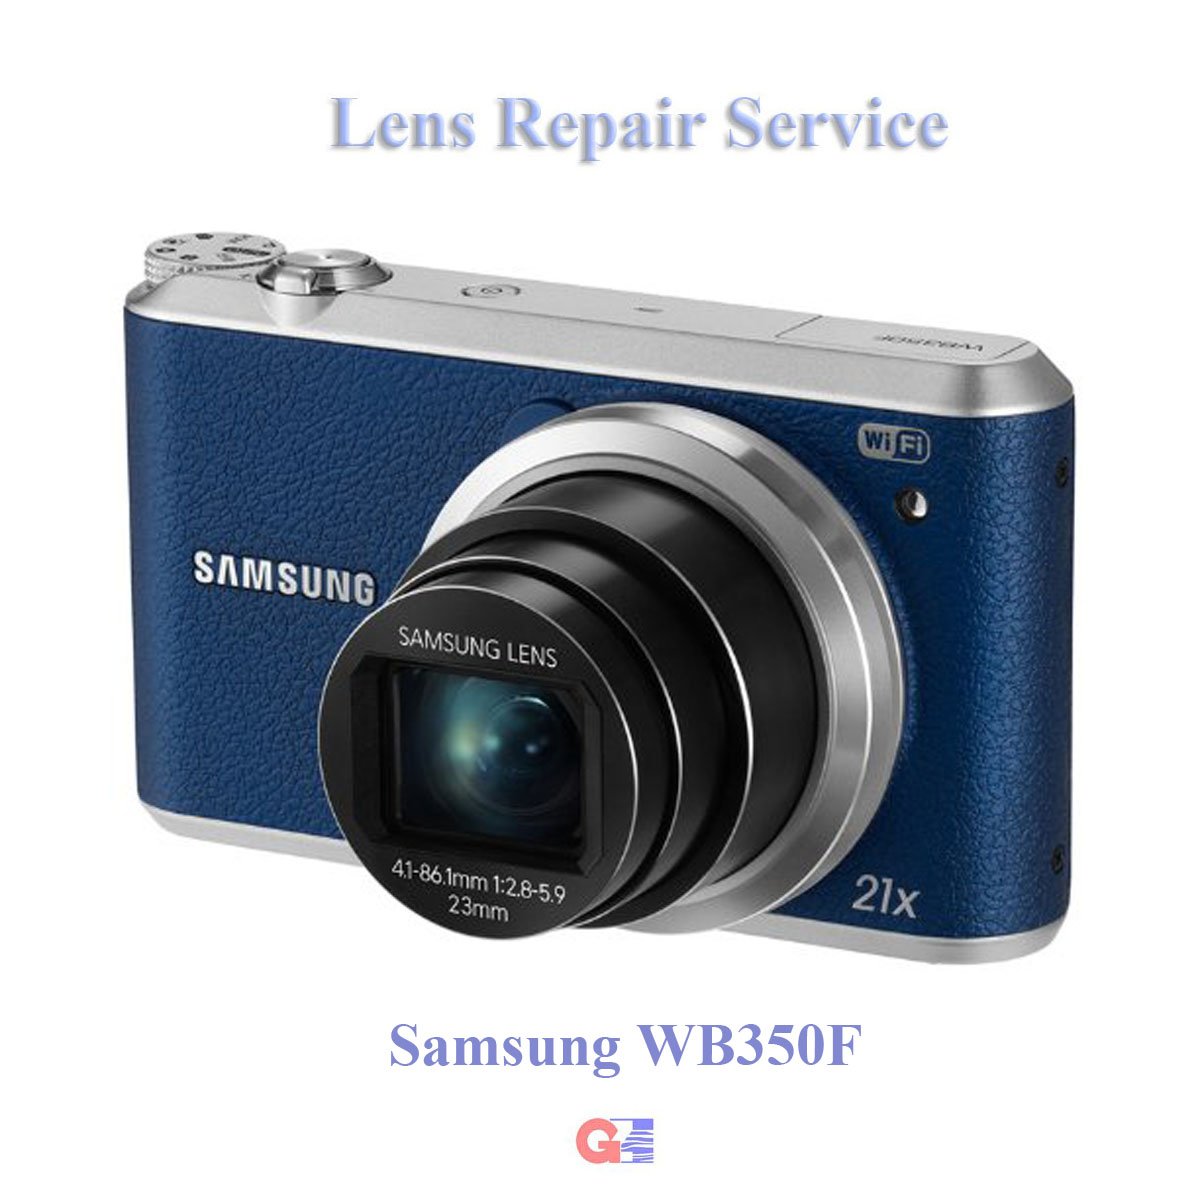 Samsung WB350F Lens Repair Service - Using Genuine Samsung Parts